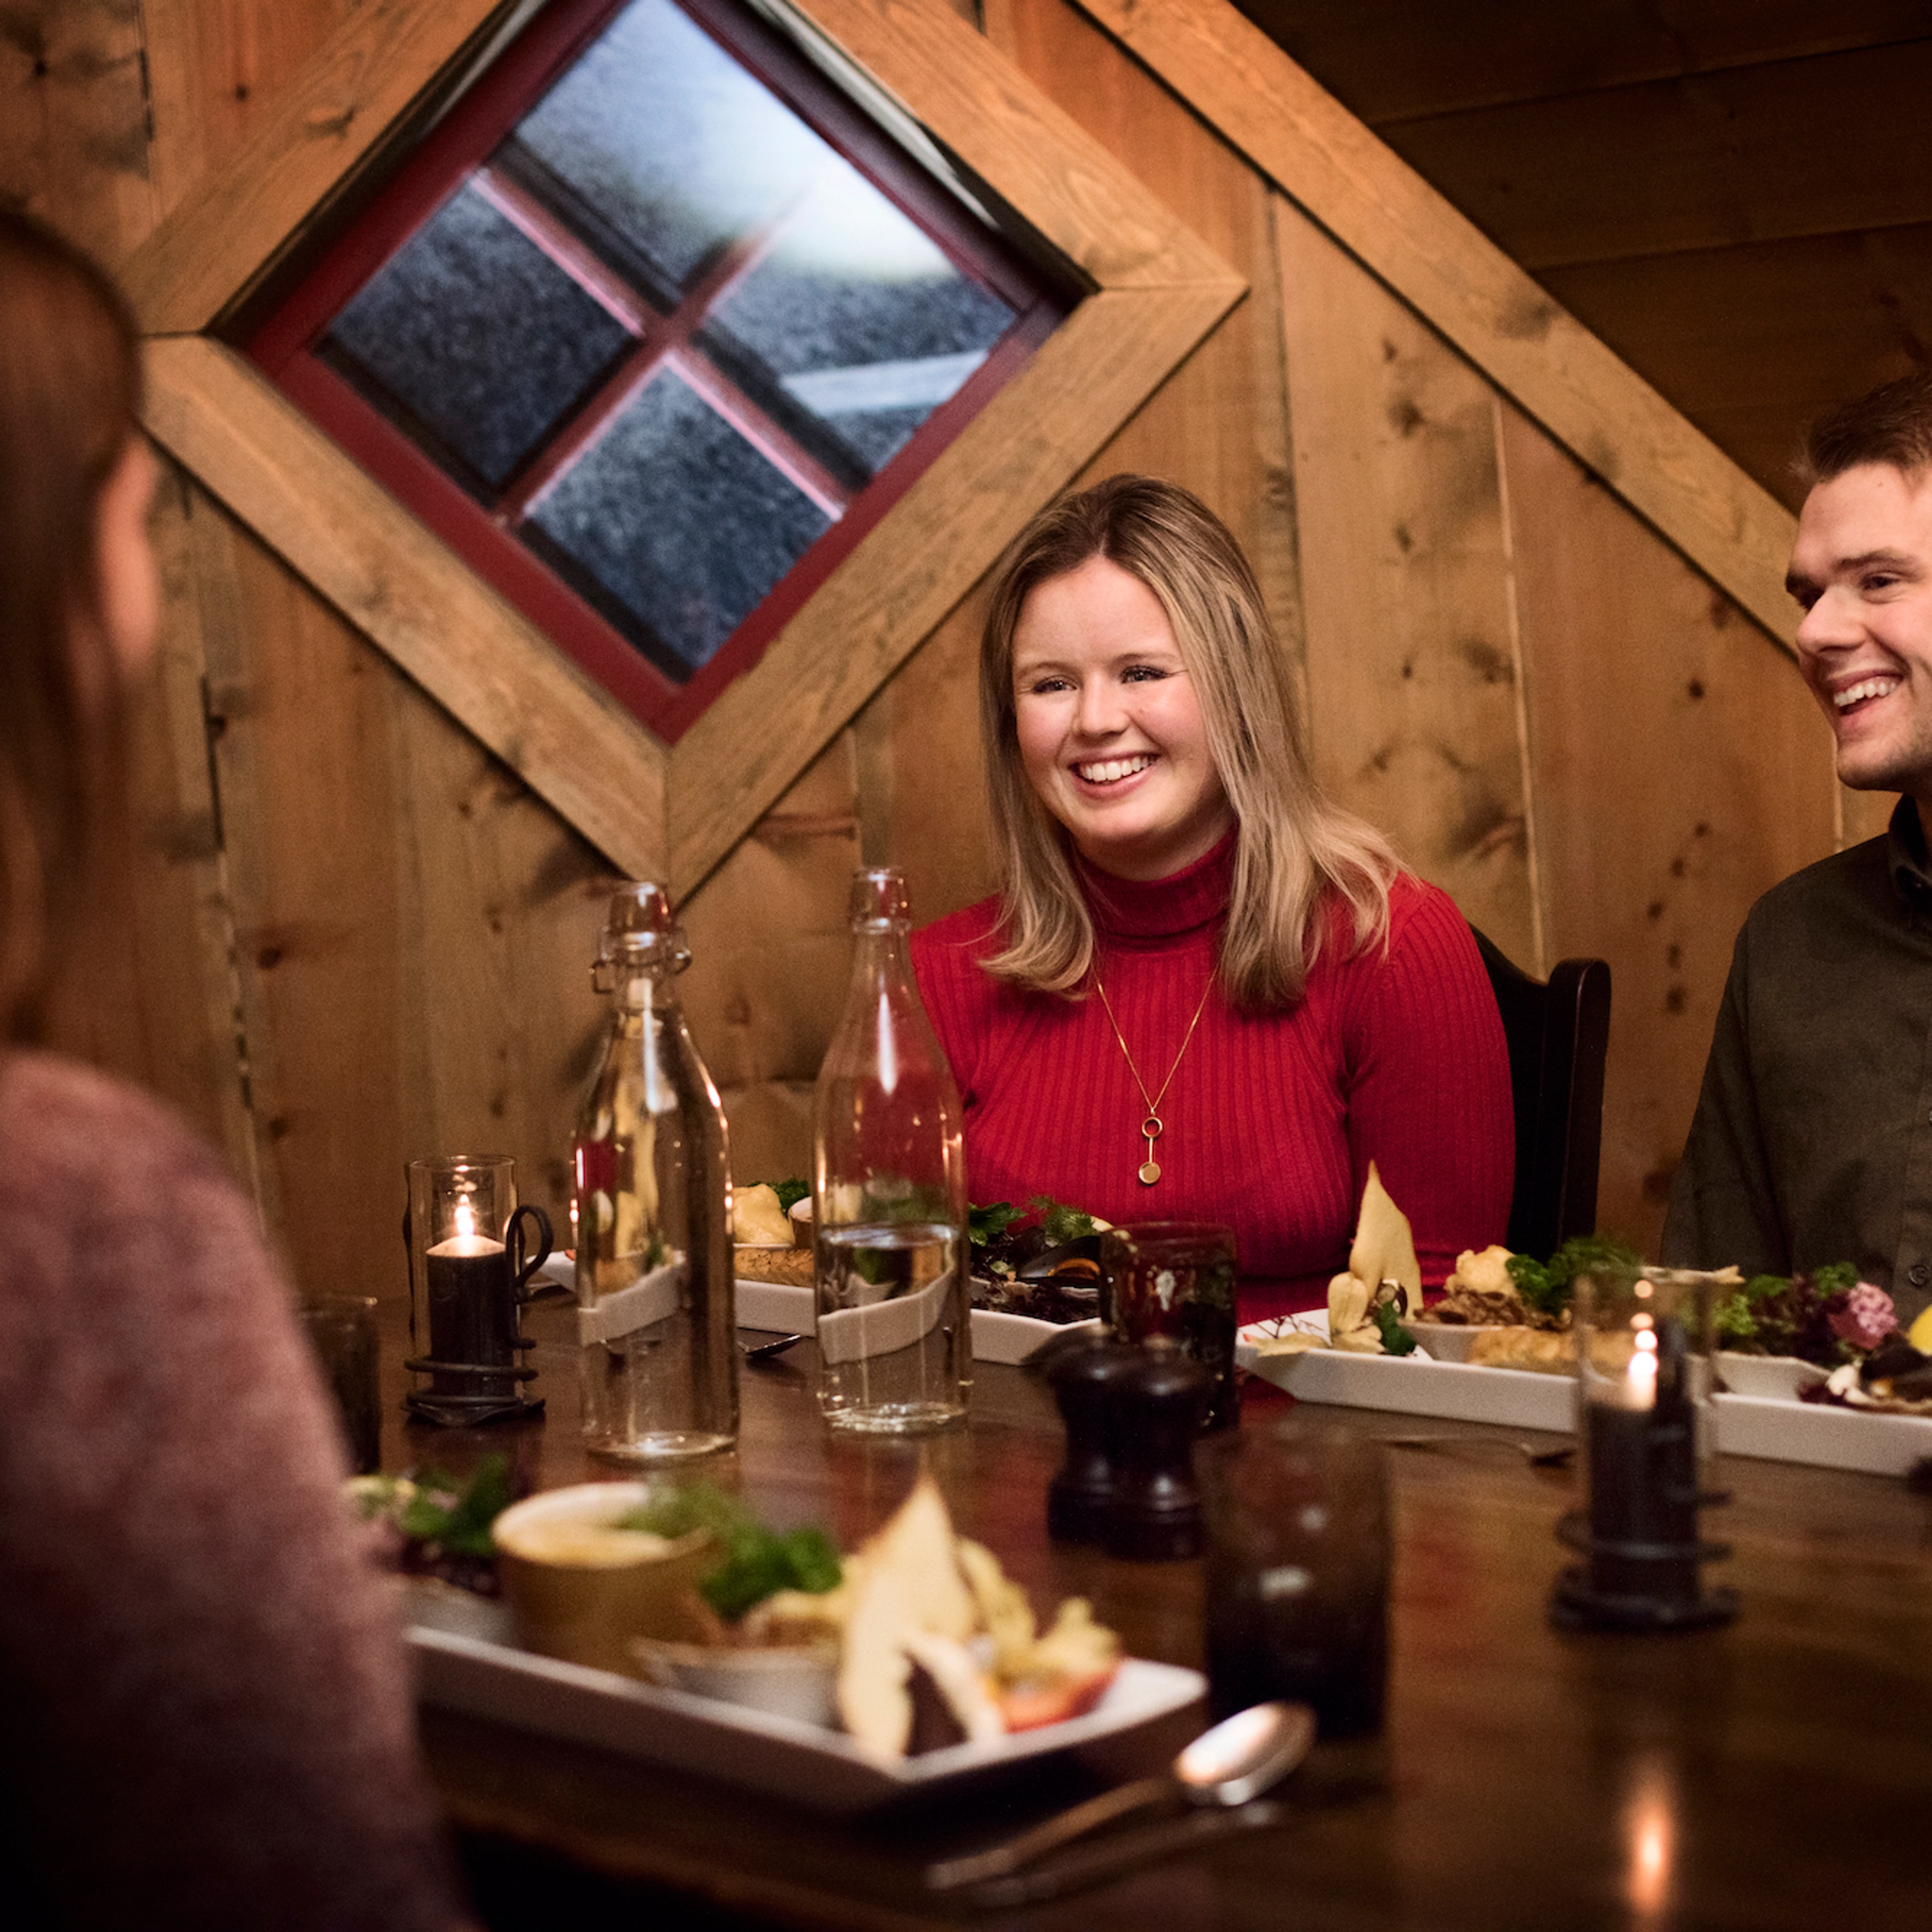 Things to do in Flåm - Winter fjord safari in Flåm with Viking dinner - Flåm, Norway